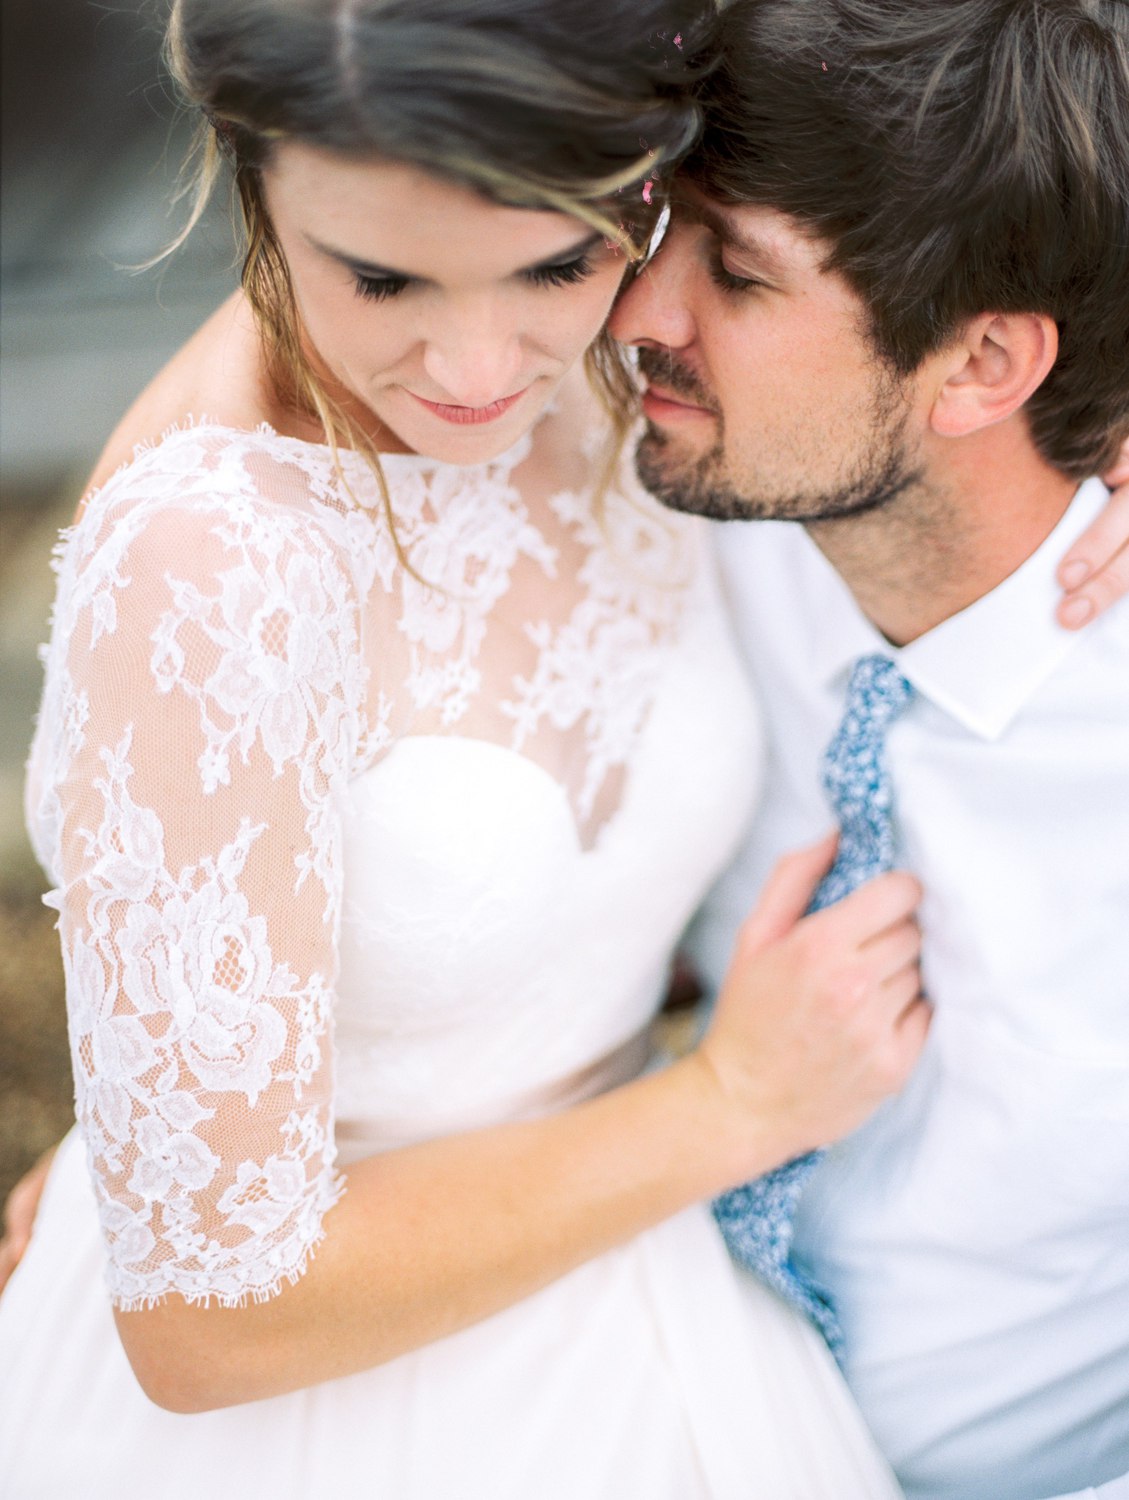 Tsali Notch Vineyard Wedding | Styled shoot | lace wedding dress | Flowy dress | portra 400 | film photography | Vineyard Wedding